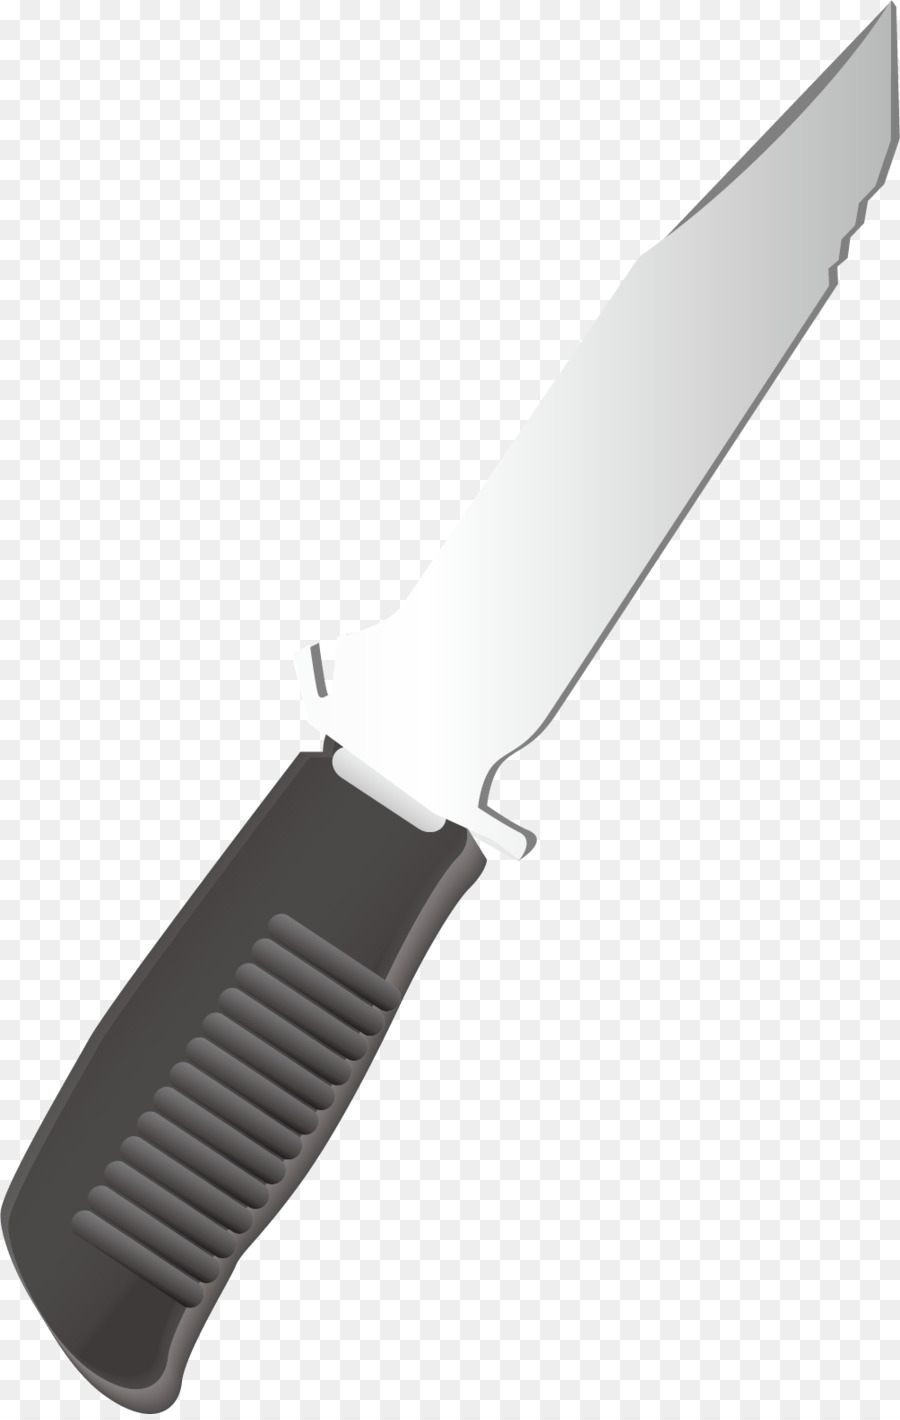 Knife - Png knife vector material png download - 1004*1577 - Free Transparent Knife png Download.